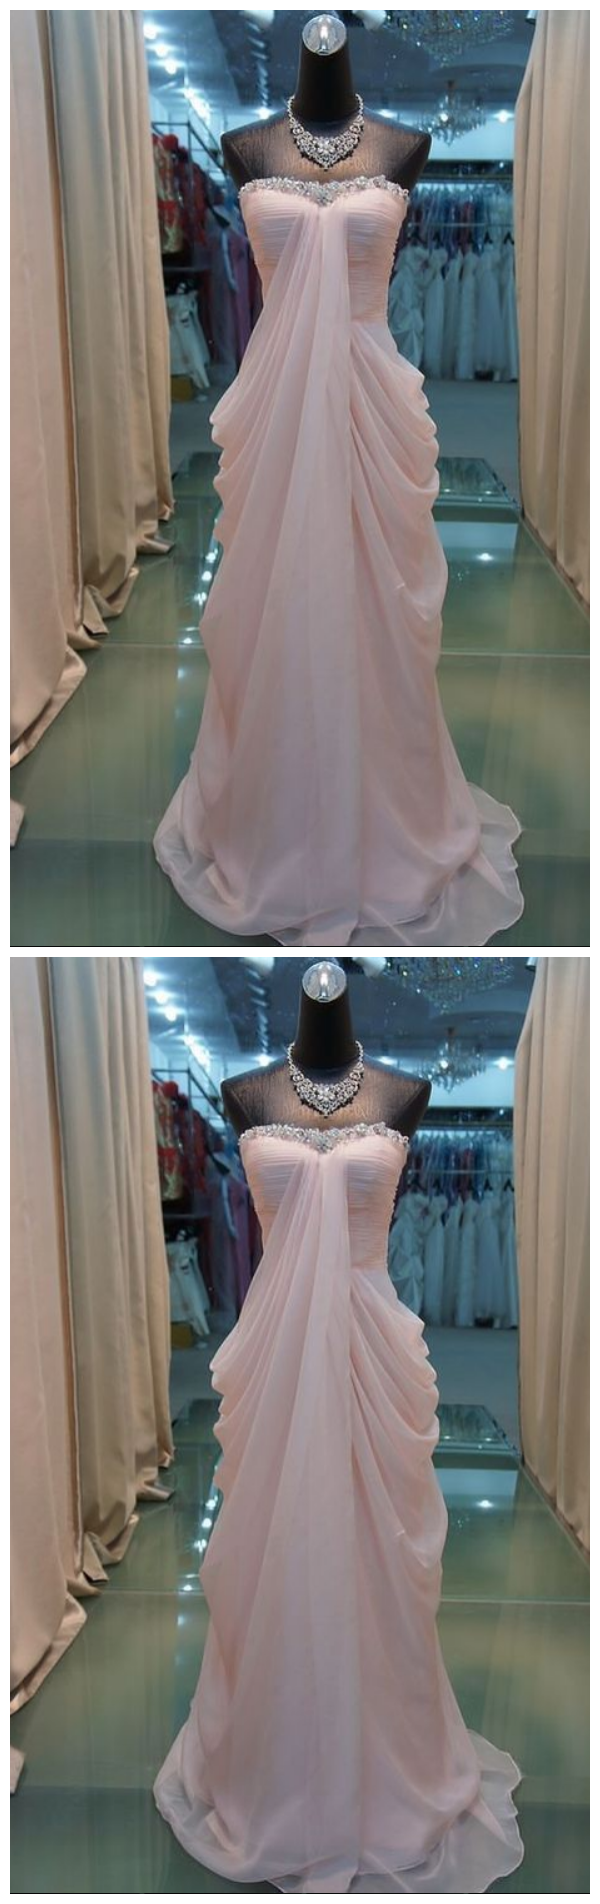 High Quality Prom Dress,chiffon Prom Dress,a-lineprom Dress,strapless Prom Dress,sequined Prom Dress